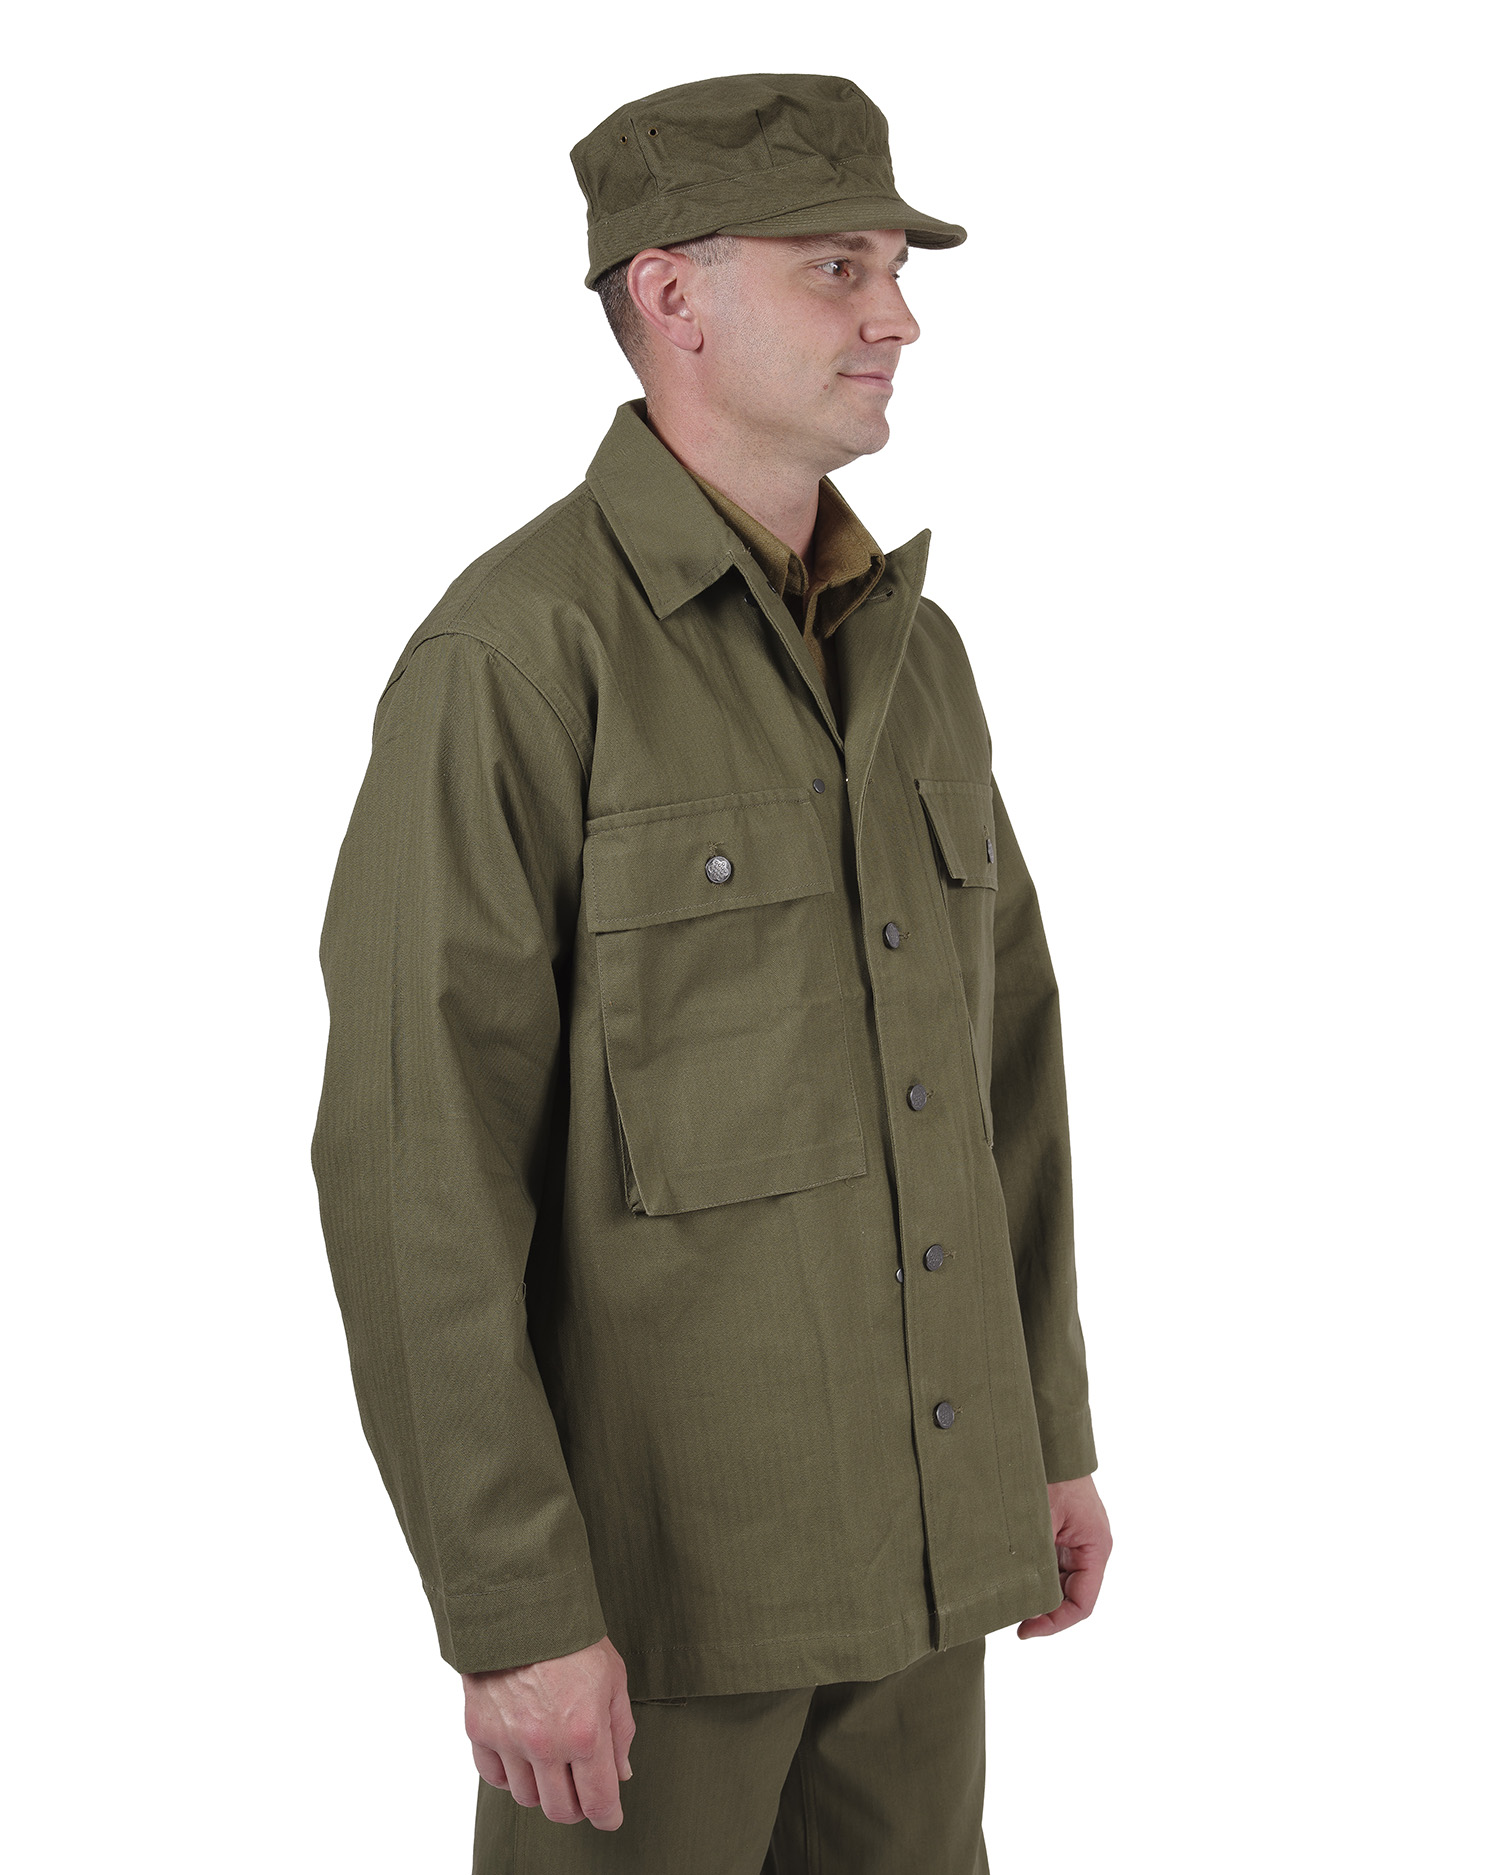 WWII US Army HBT Jacket